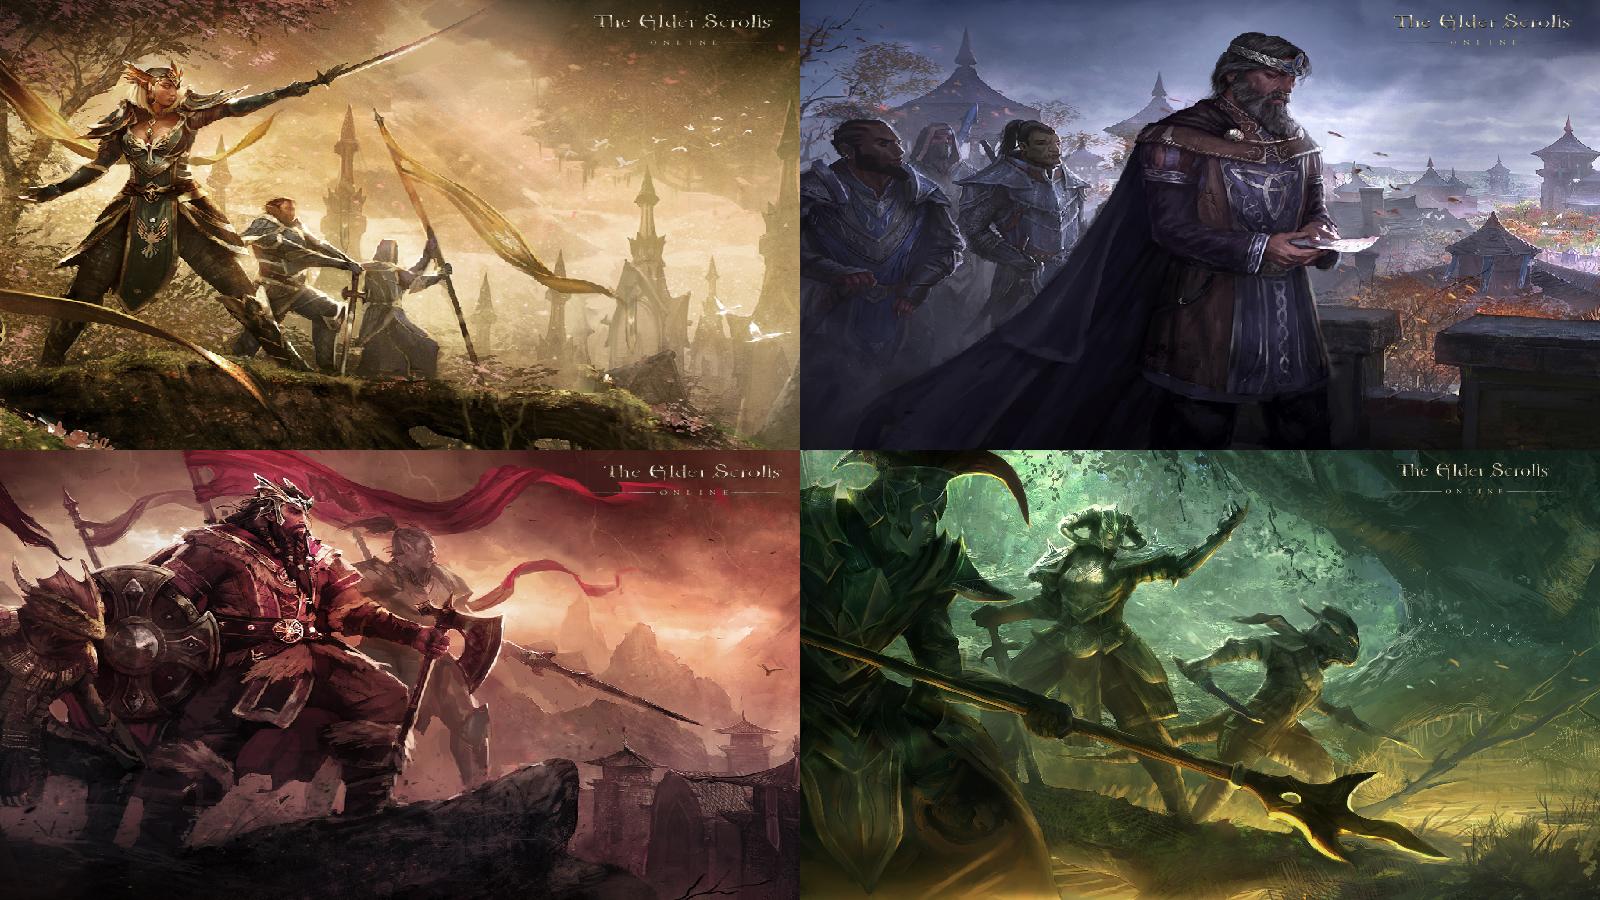 Download HQ The Elder Scrolls wallpaper / Games / 1600x900